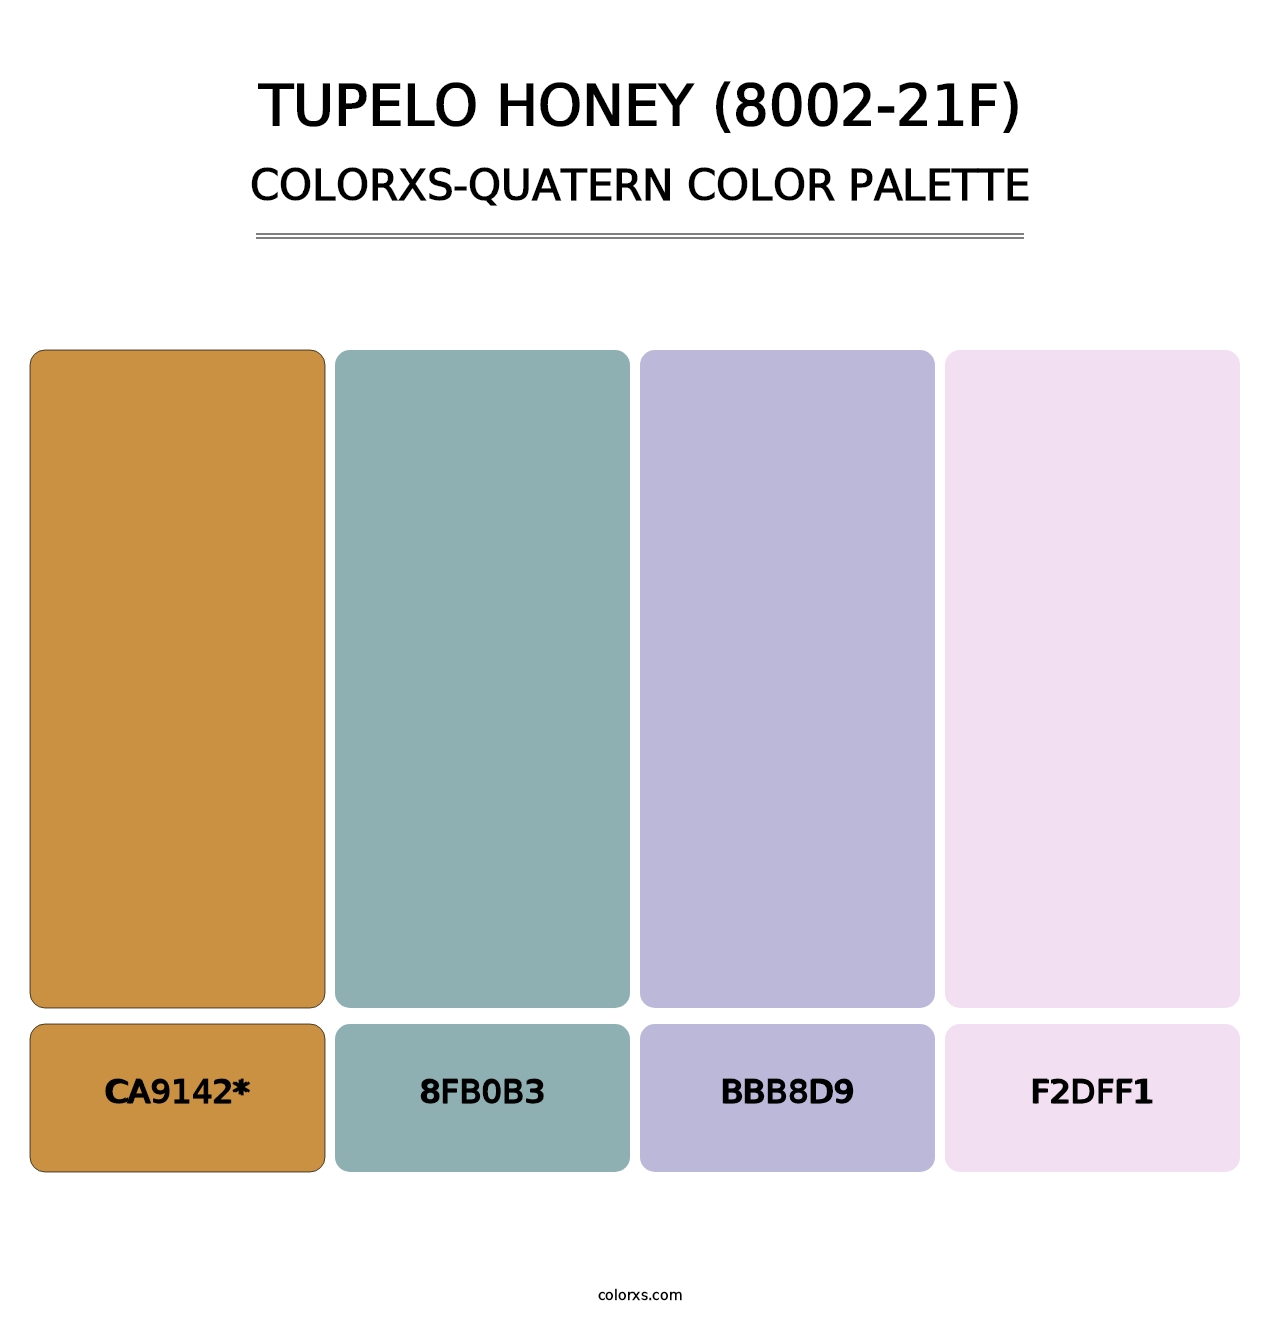 Tupelo Honey (8002-21F) - Colorxs Quatern Palette